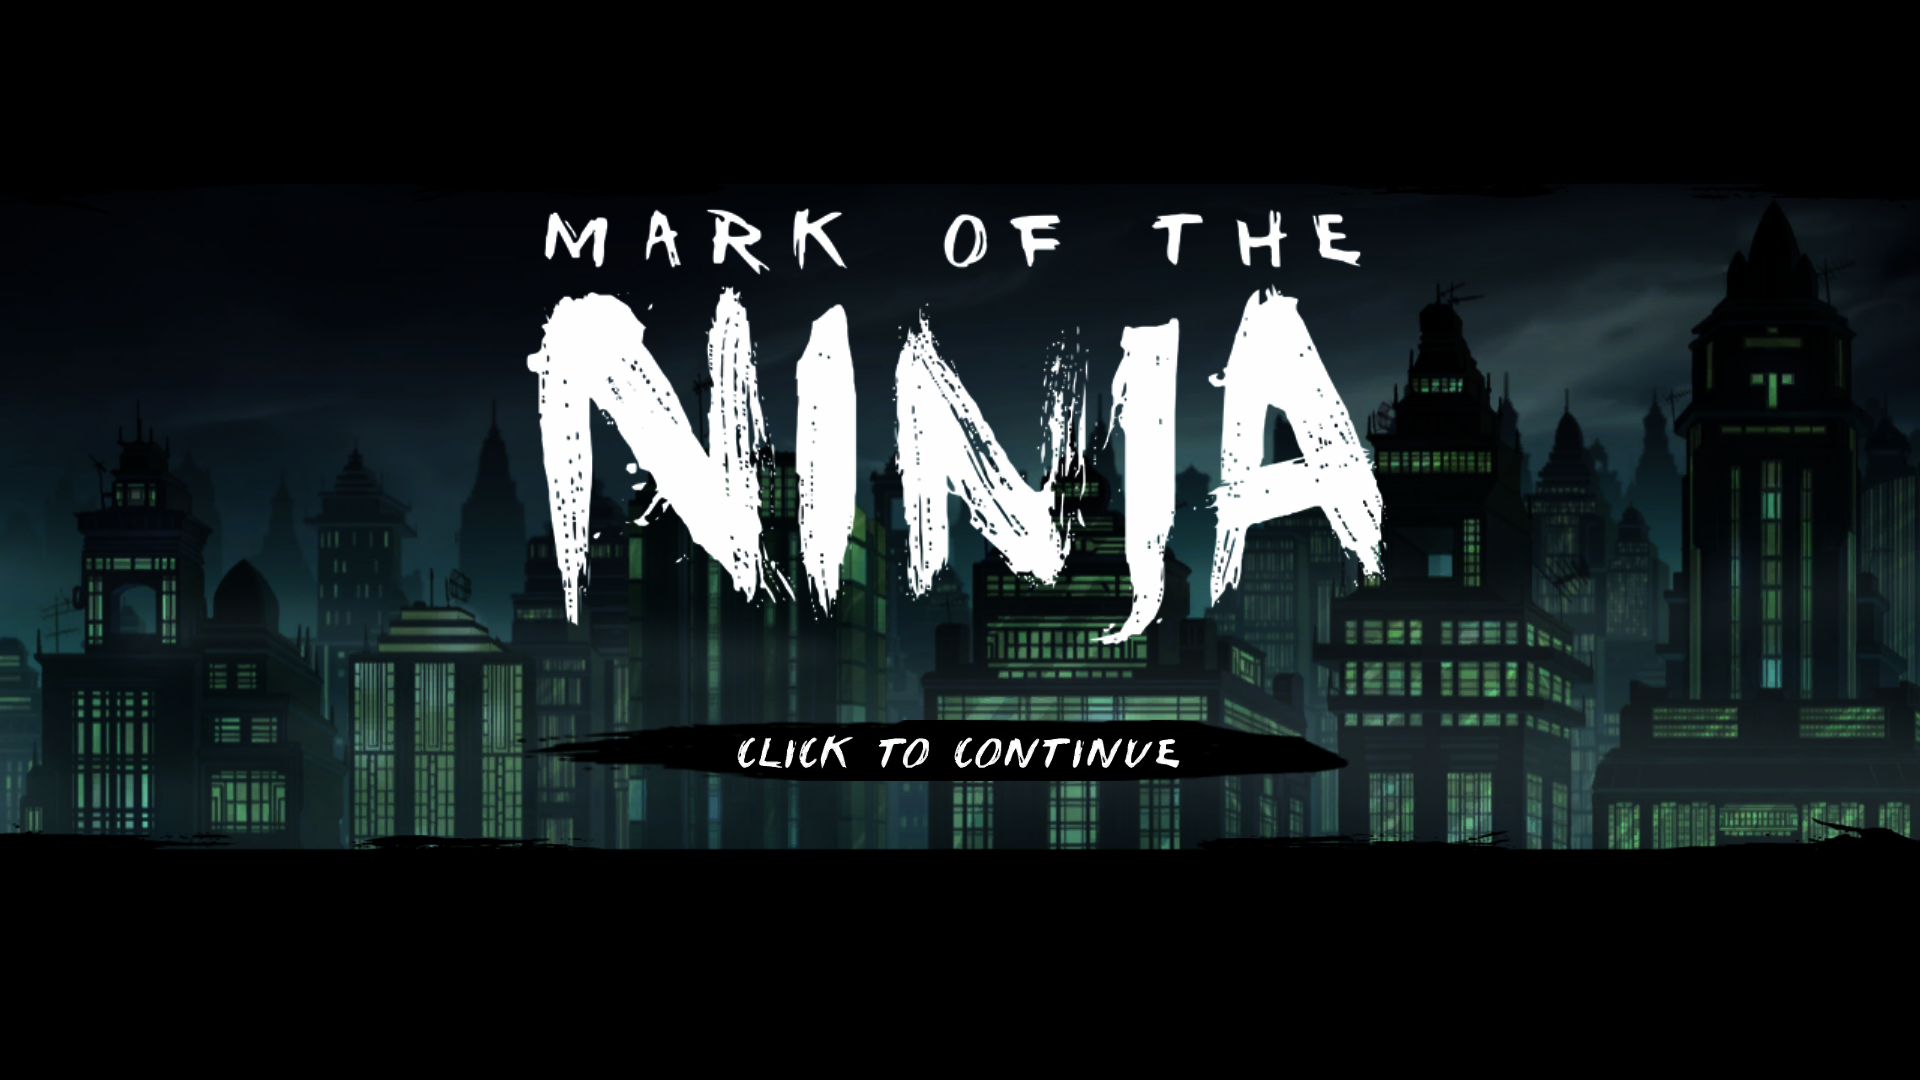   Mark of the Ninja PC chomikuj - game 2012-10-17 10-49-02-69.bmp